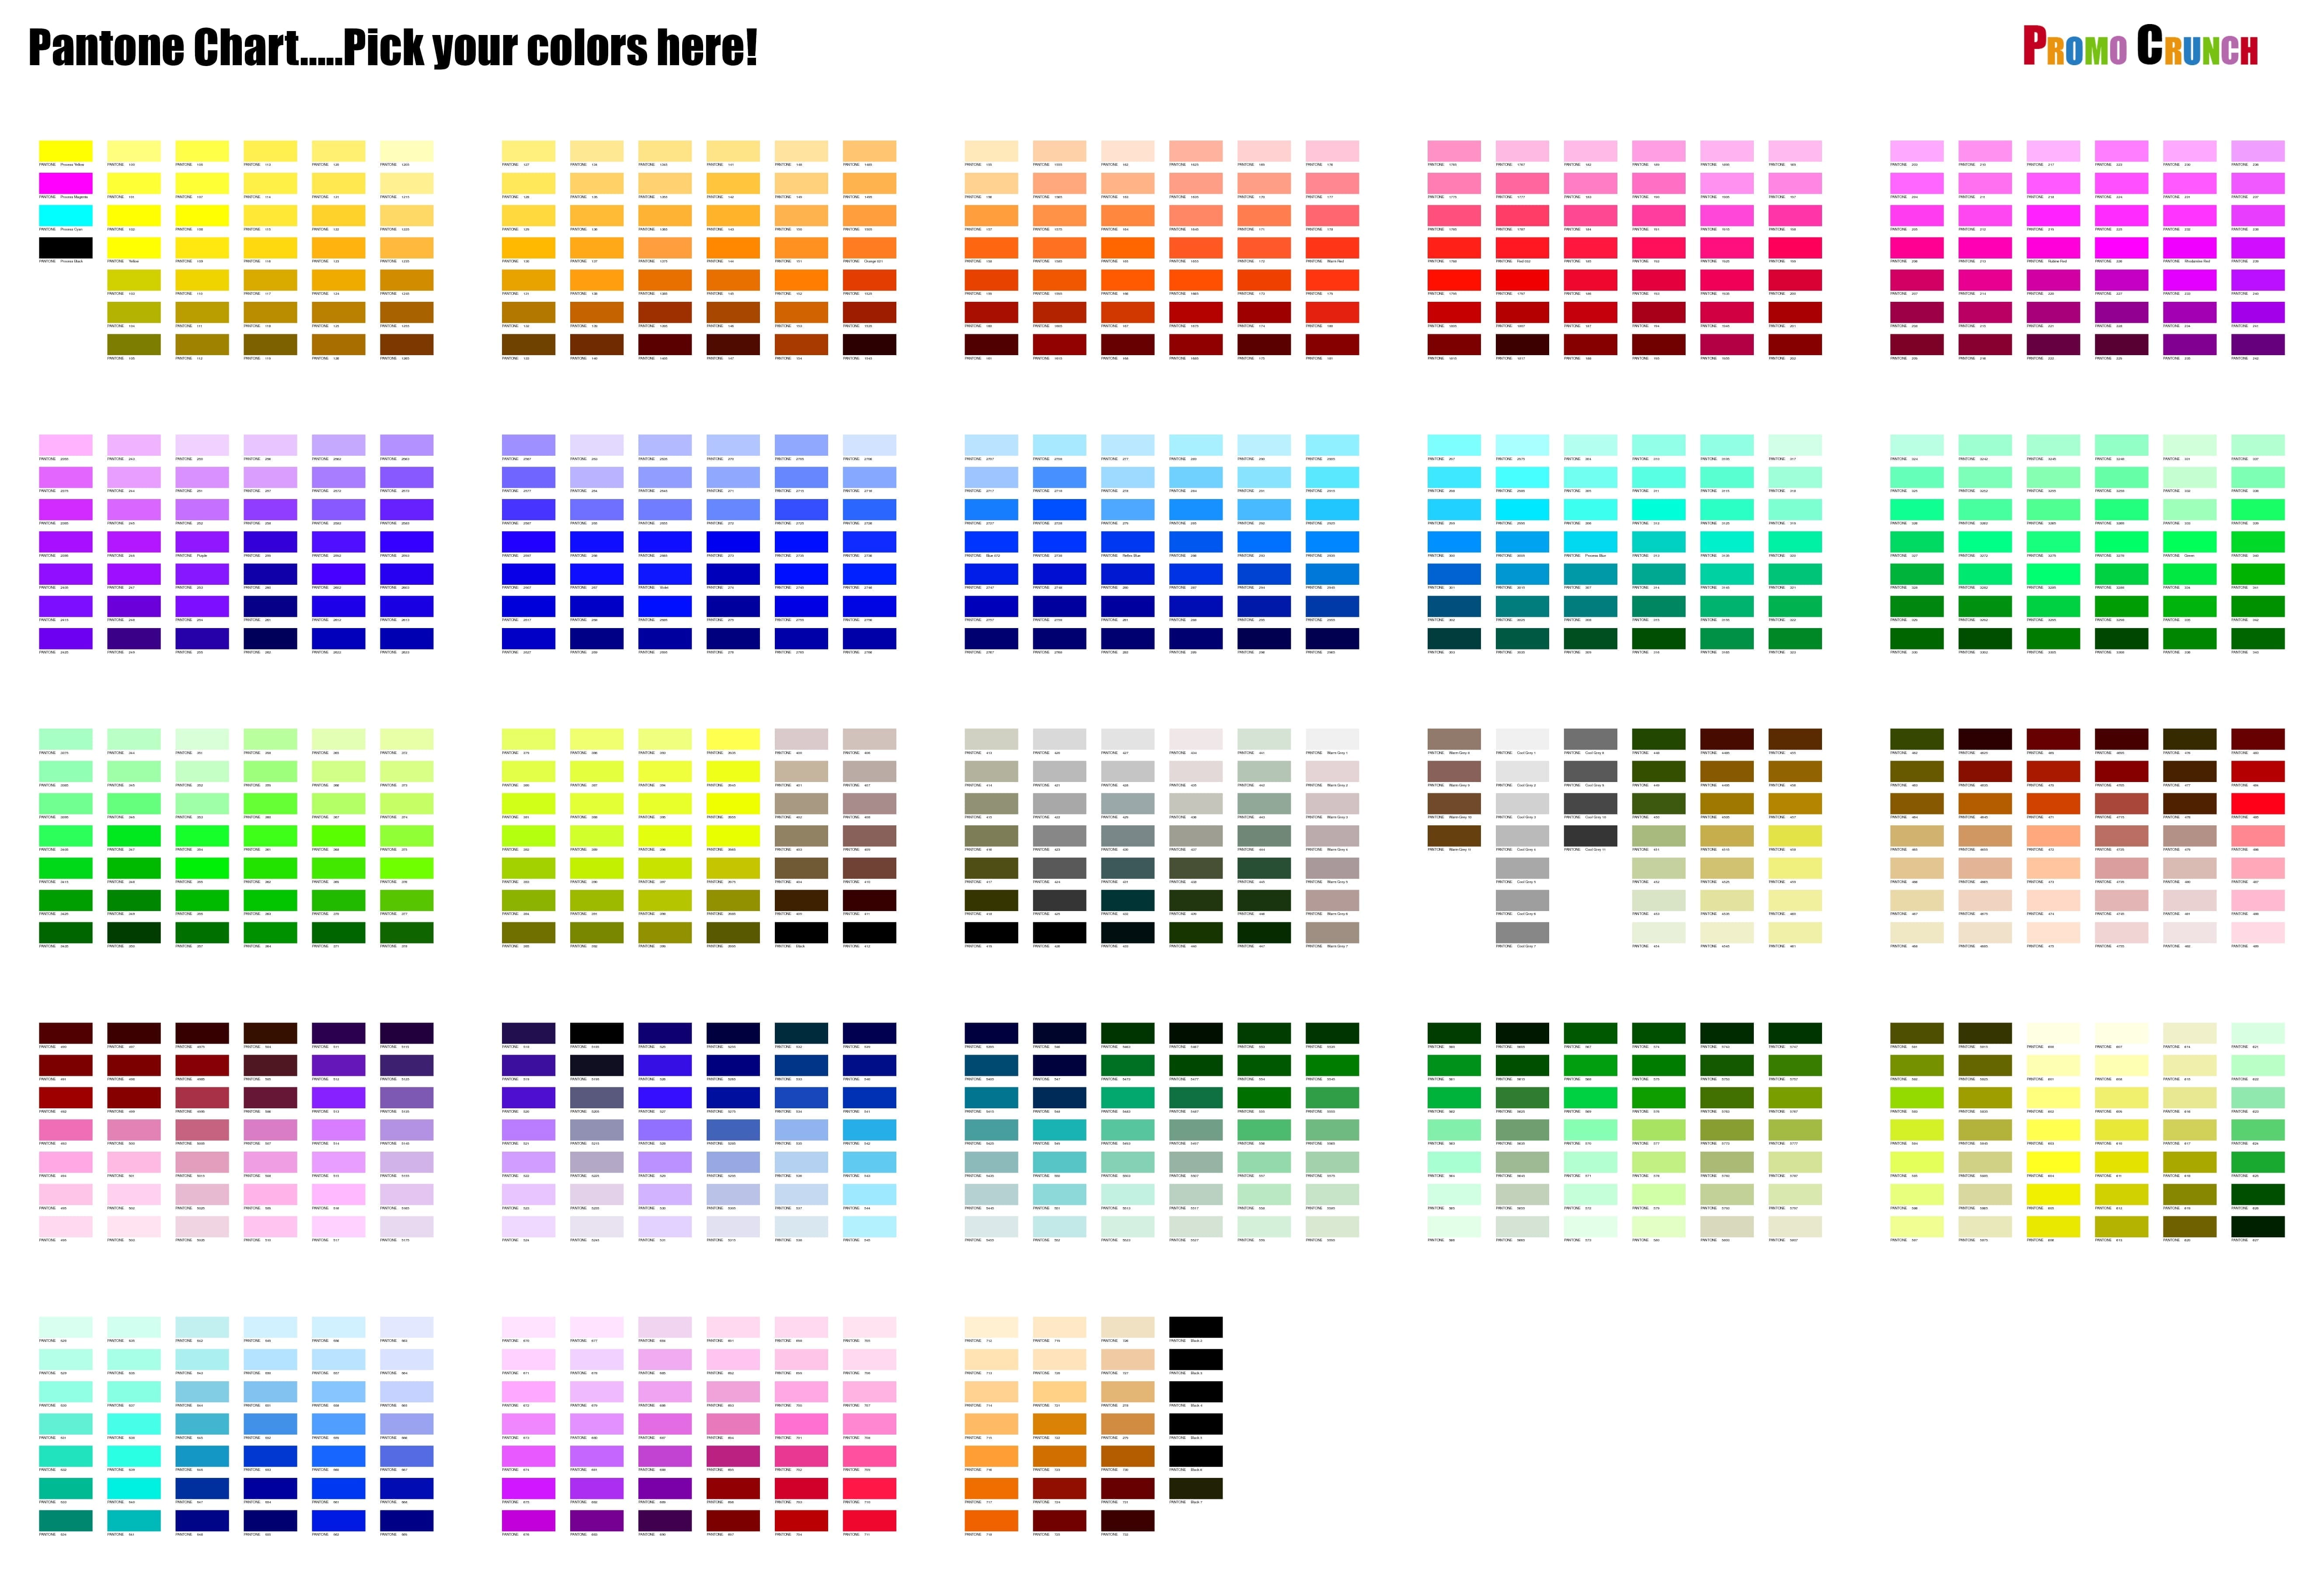 Pantone Color Chart Promo Crunch. World’s Best Custom